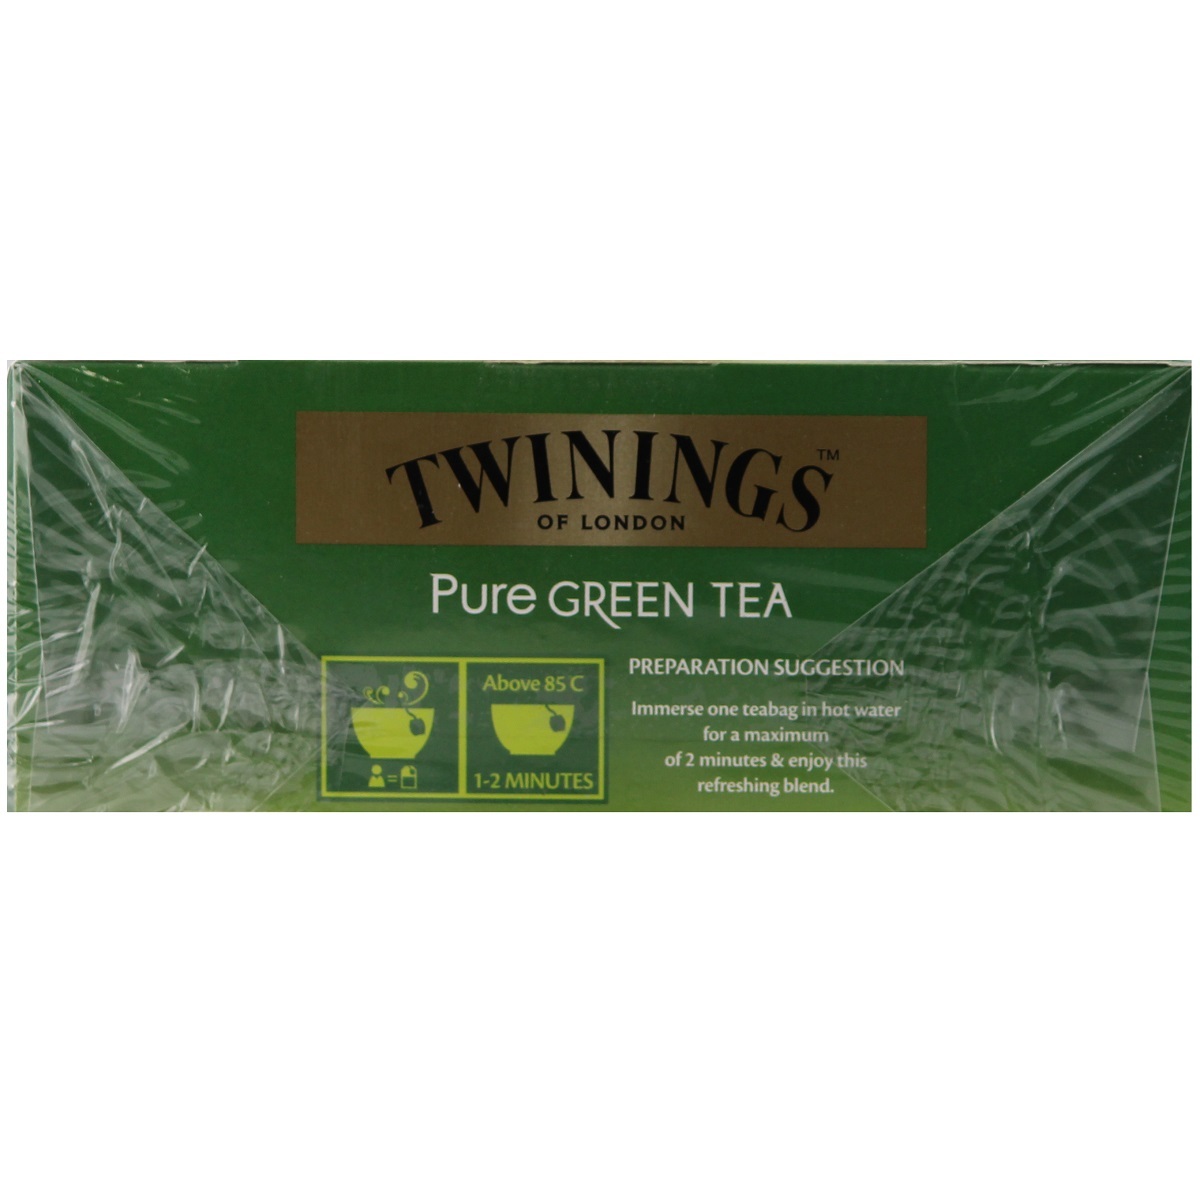 Twinings Green Tea 100 Tea Bags